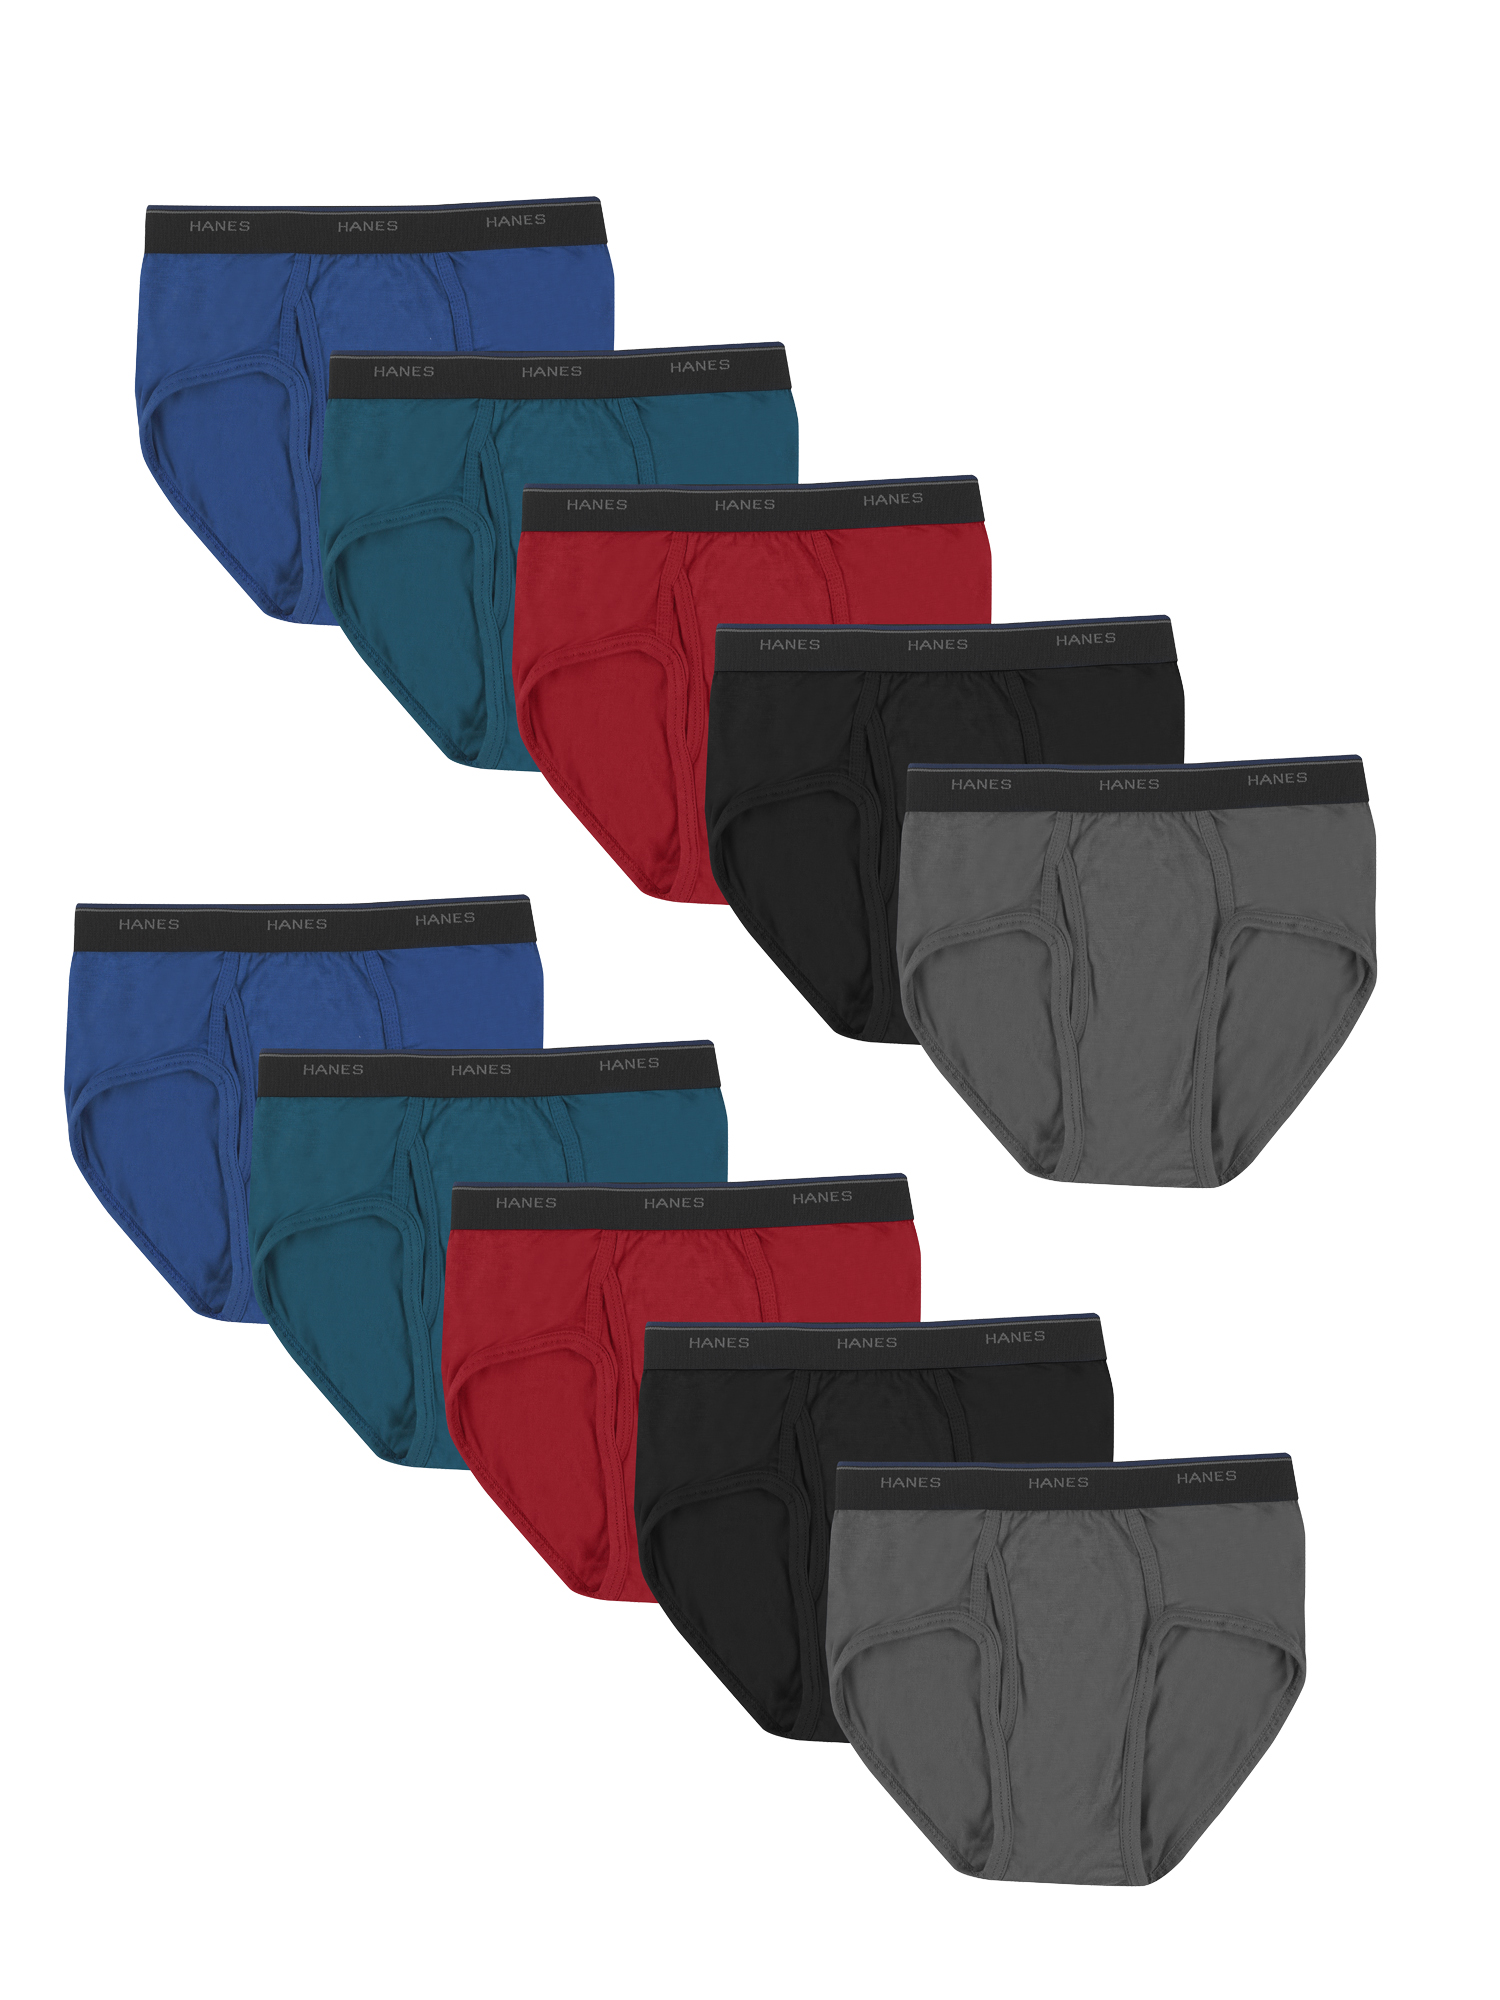 Hanes Men's Tagless ComfortBlend Assorted Briefs, 10-Pack Bundle, Size S-3XL - image 3 of 6